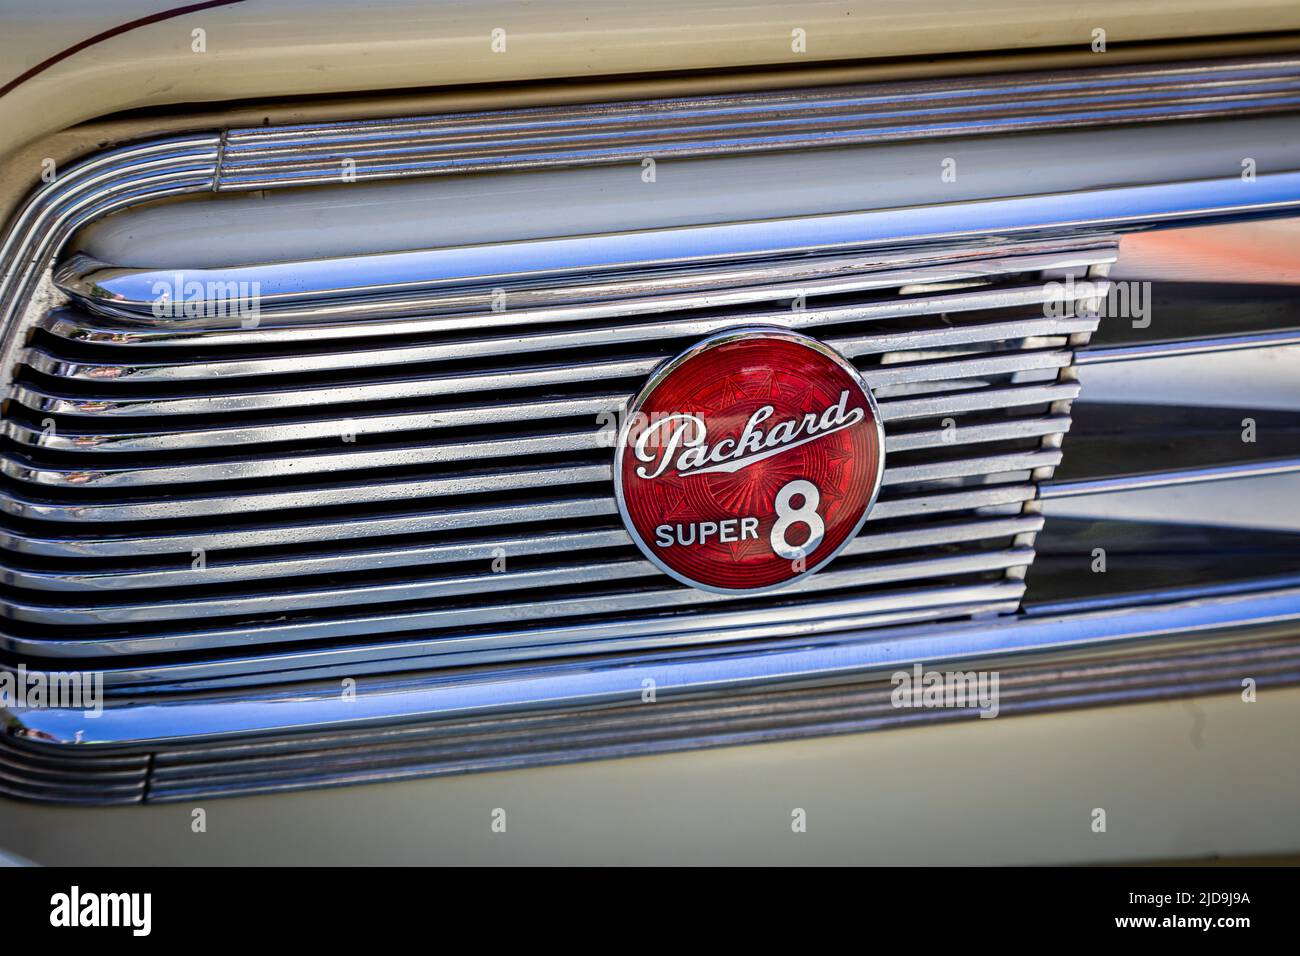 Packard Super 8 Stock Photo